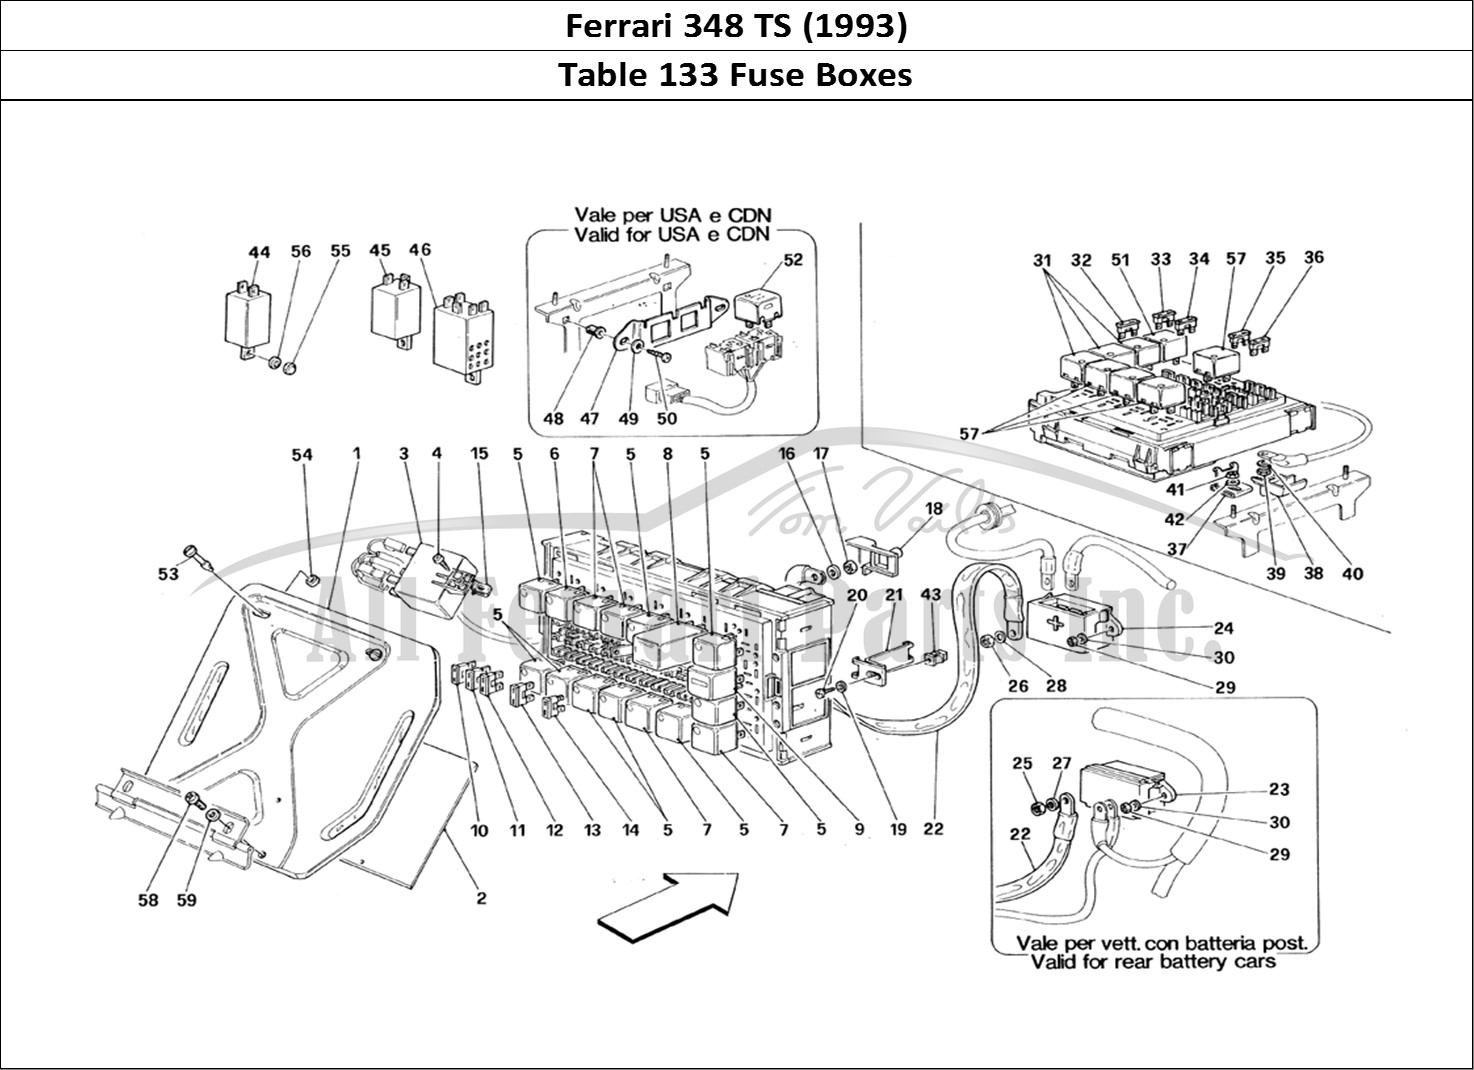 Ferrari Parts Ferrari 348 TB (1993) Page 133 Electrical Boards